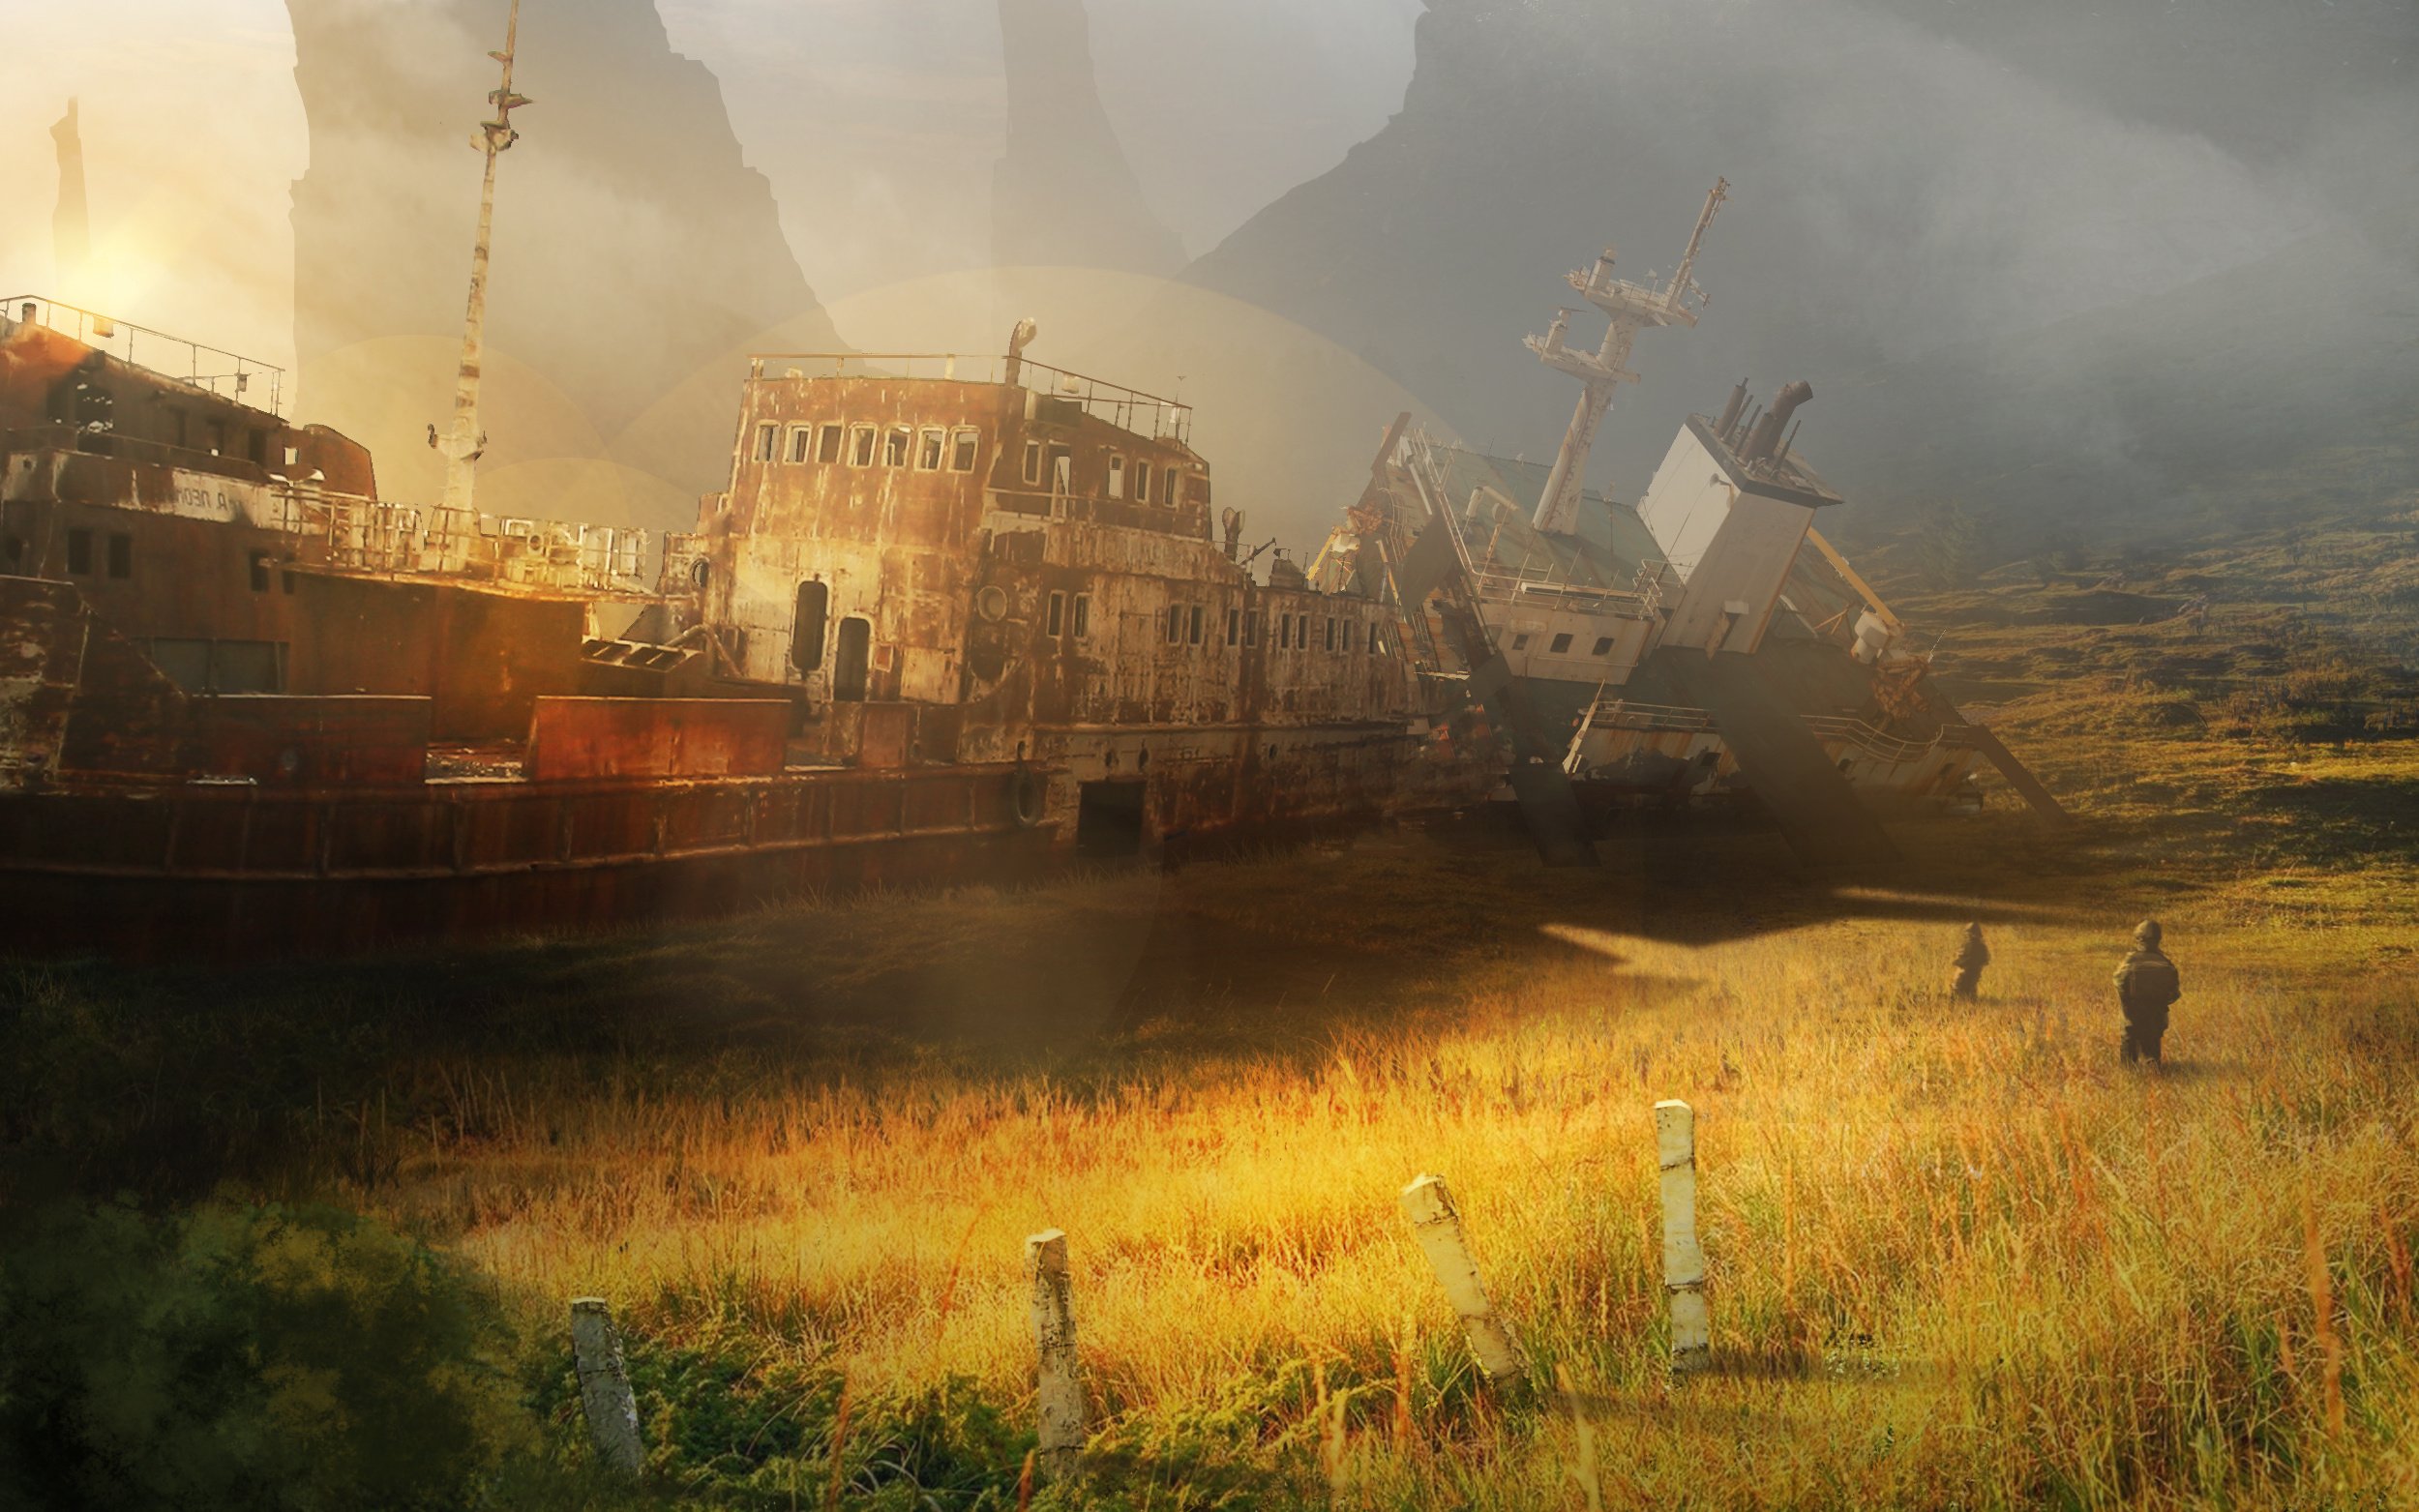 stalker, Ship, Wasteland, Sci fi, Apocalyptic, Boat Wallpaper